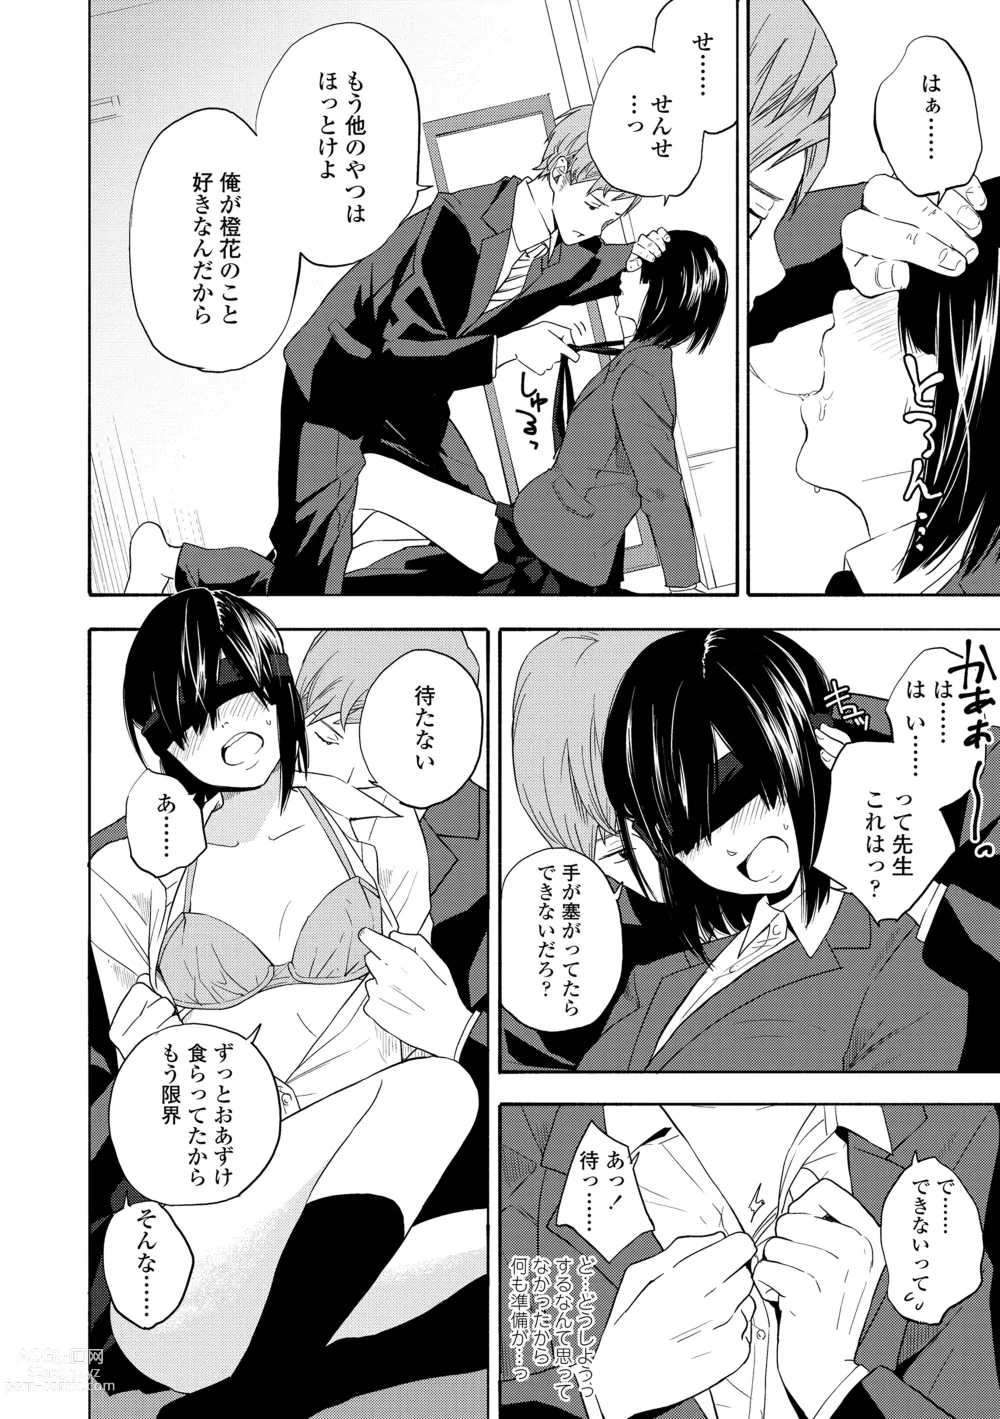 Page 10 of manga Shishunki no Eros - puberty eros + DLsite Kounyu Tokuten